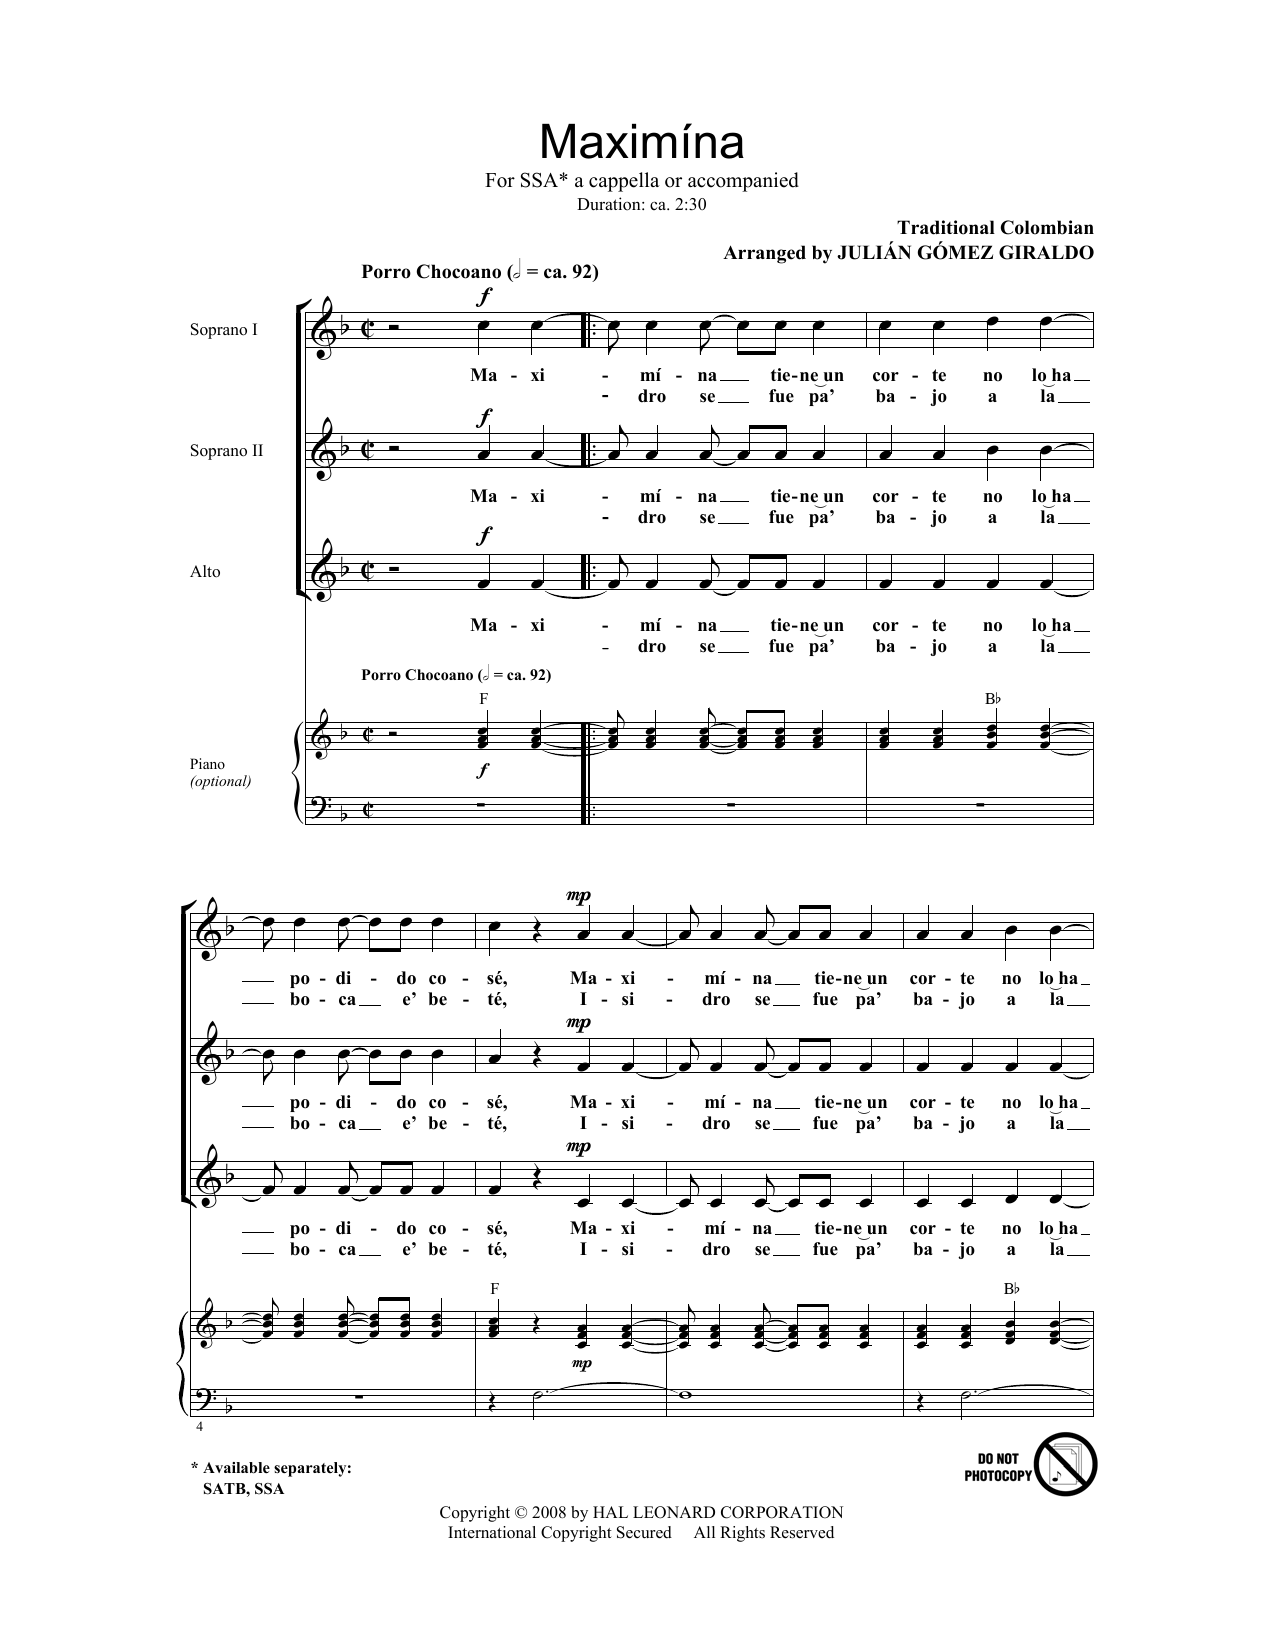 Julian Gomez Giraldo Maximina Sheet Music Notes & Chords for SATB - Download or Print PDF